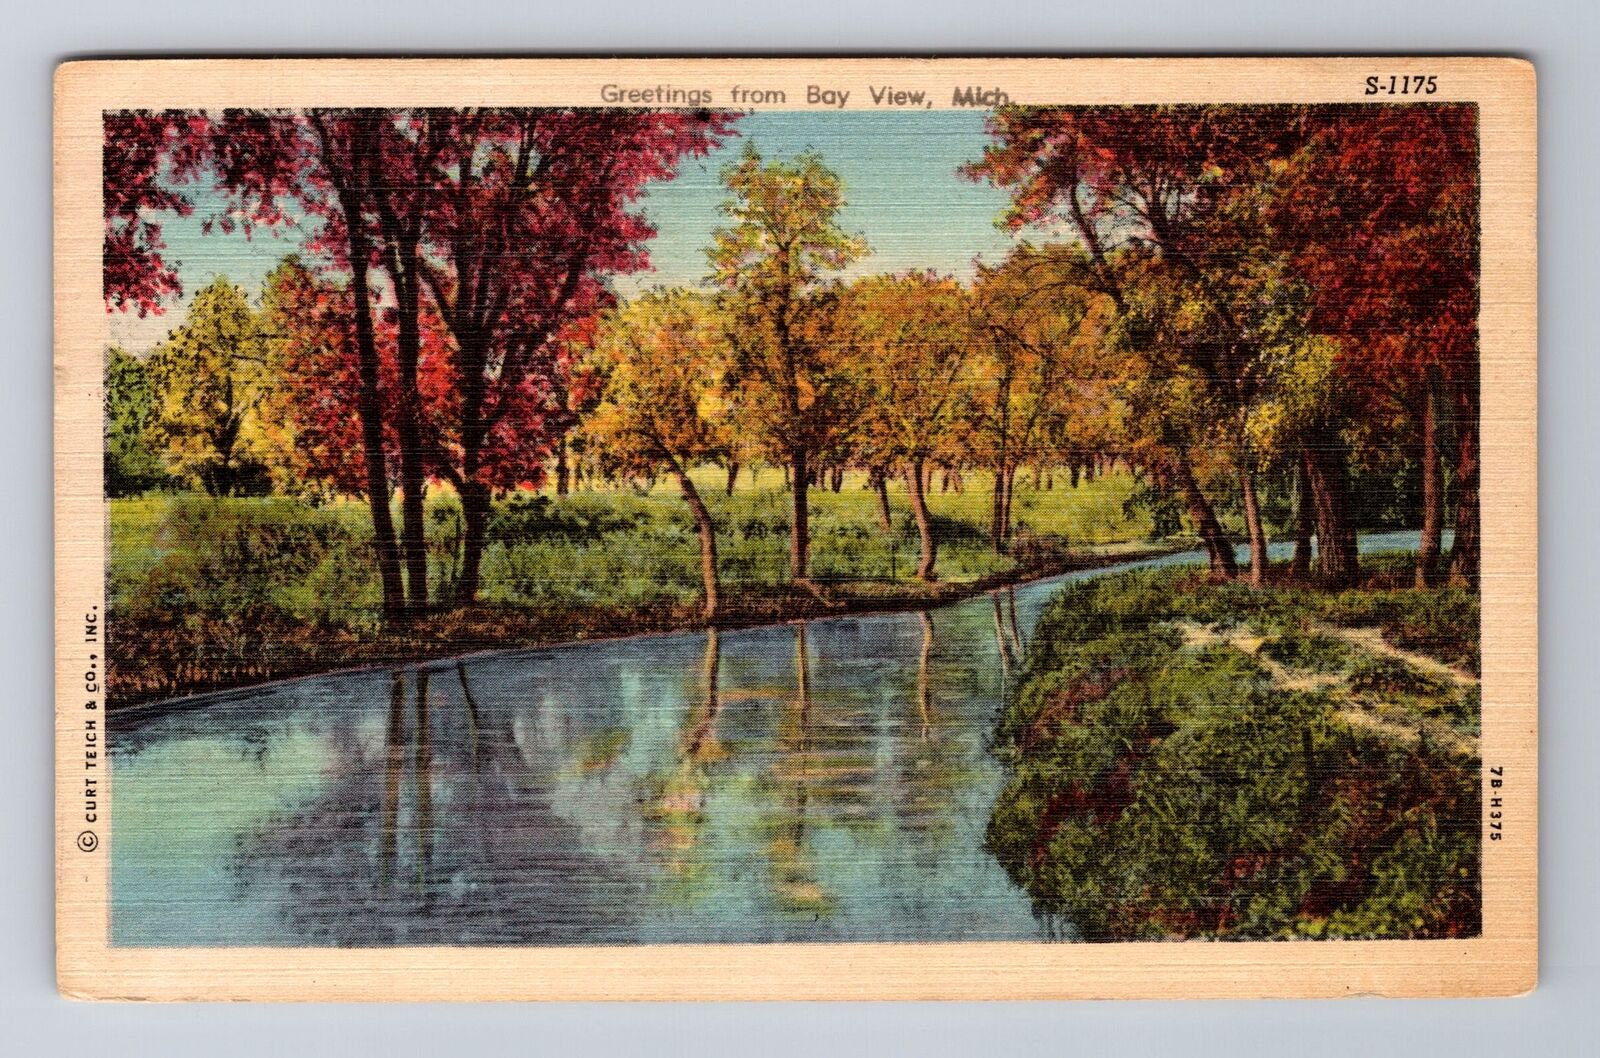 Bay View MI-Michigan, General Greetings, River View, c1955 Vintage Postcard